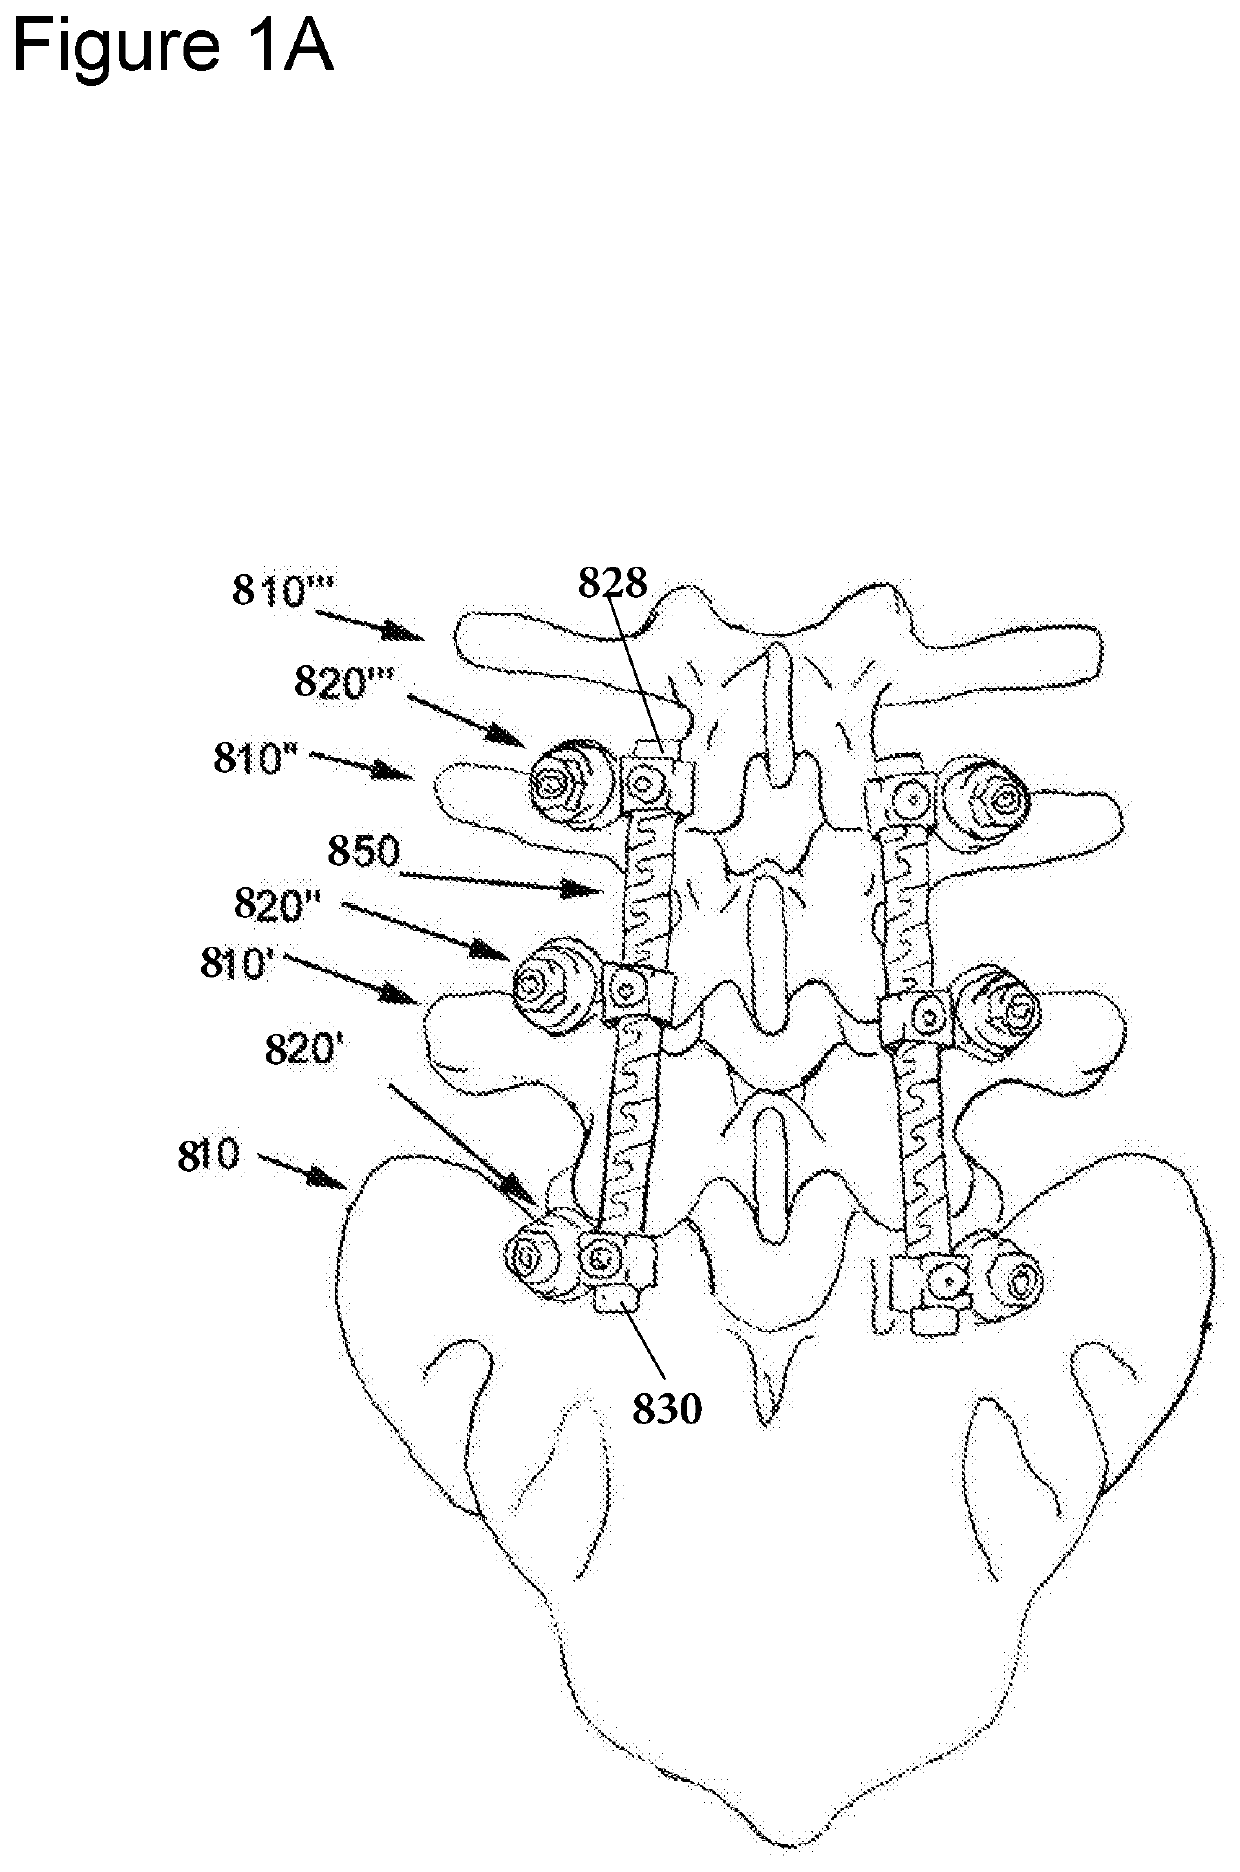 Flexible spine components having multiple slots